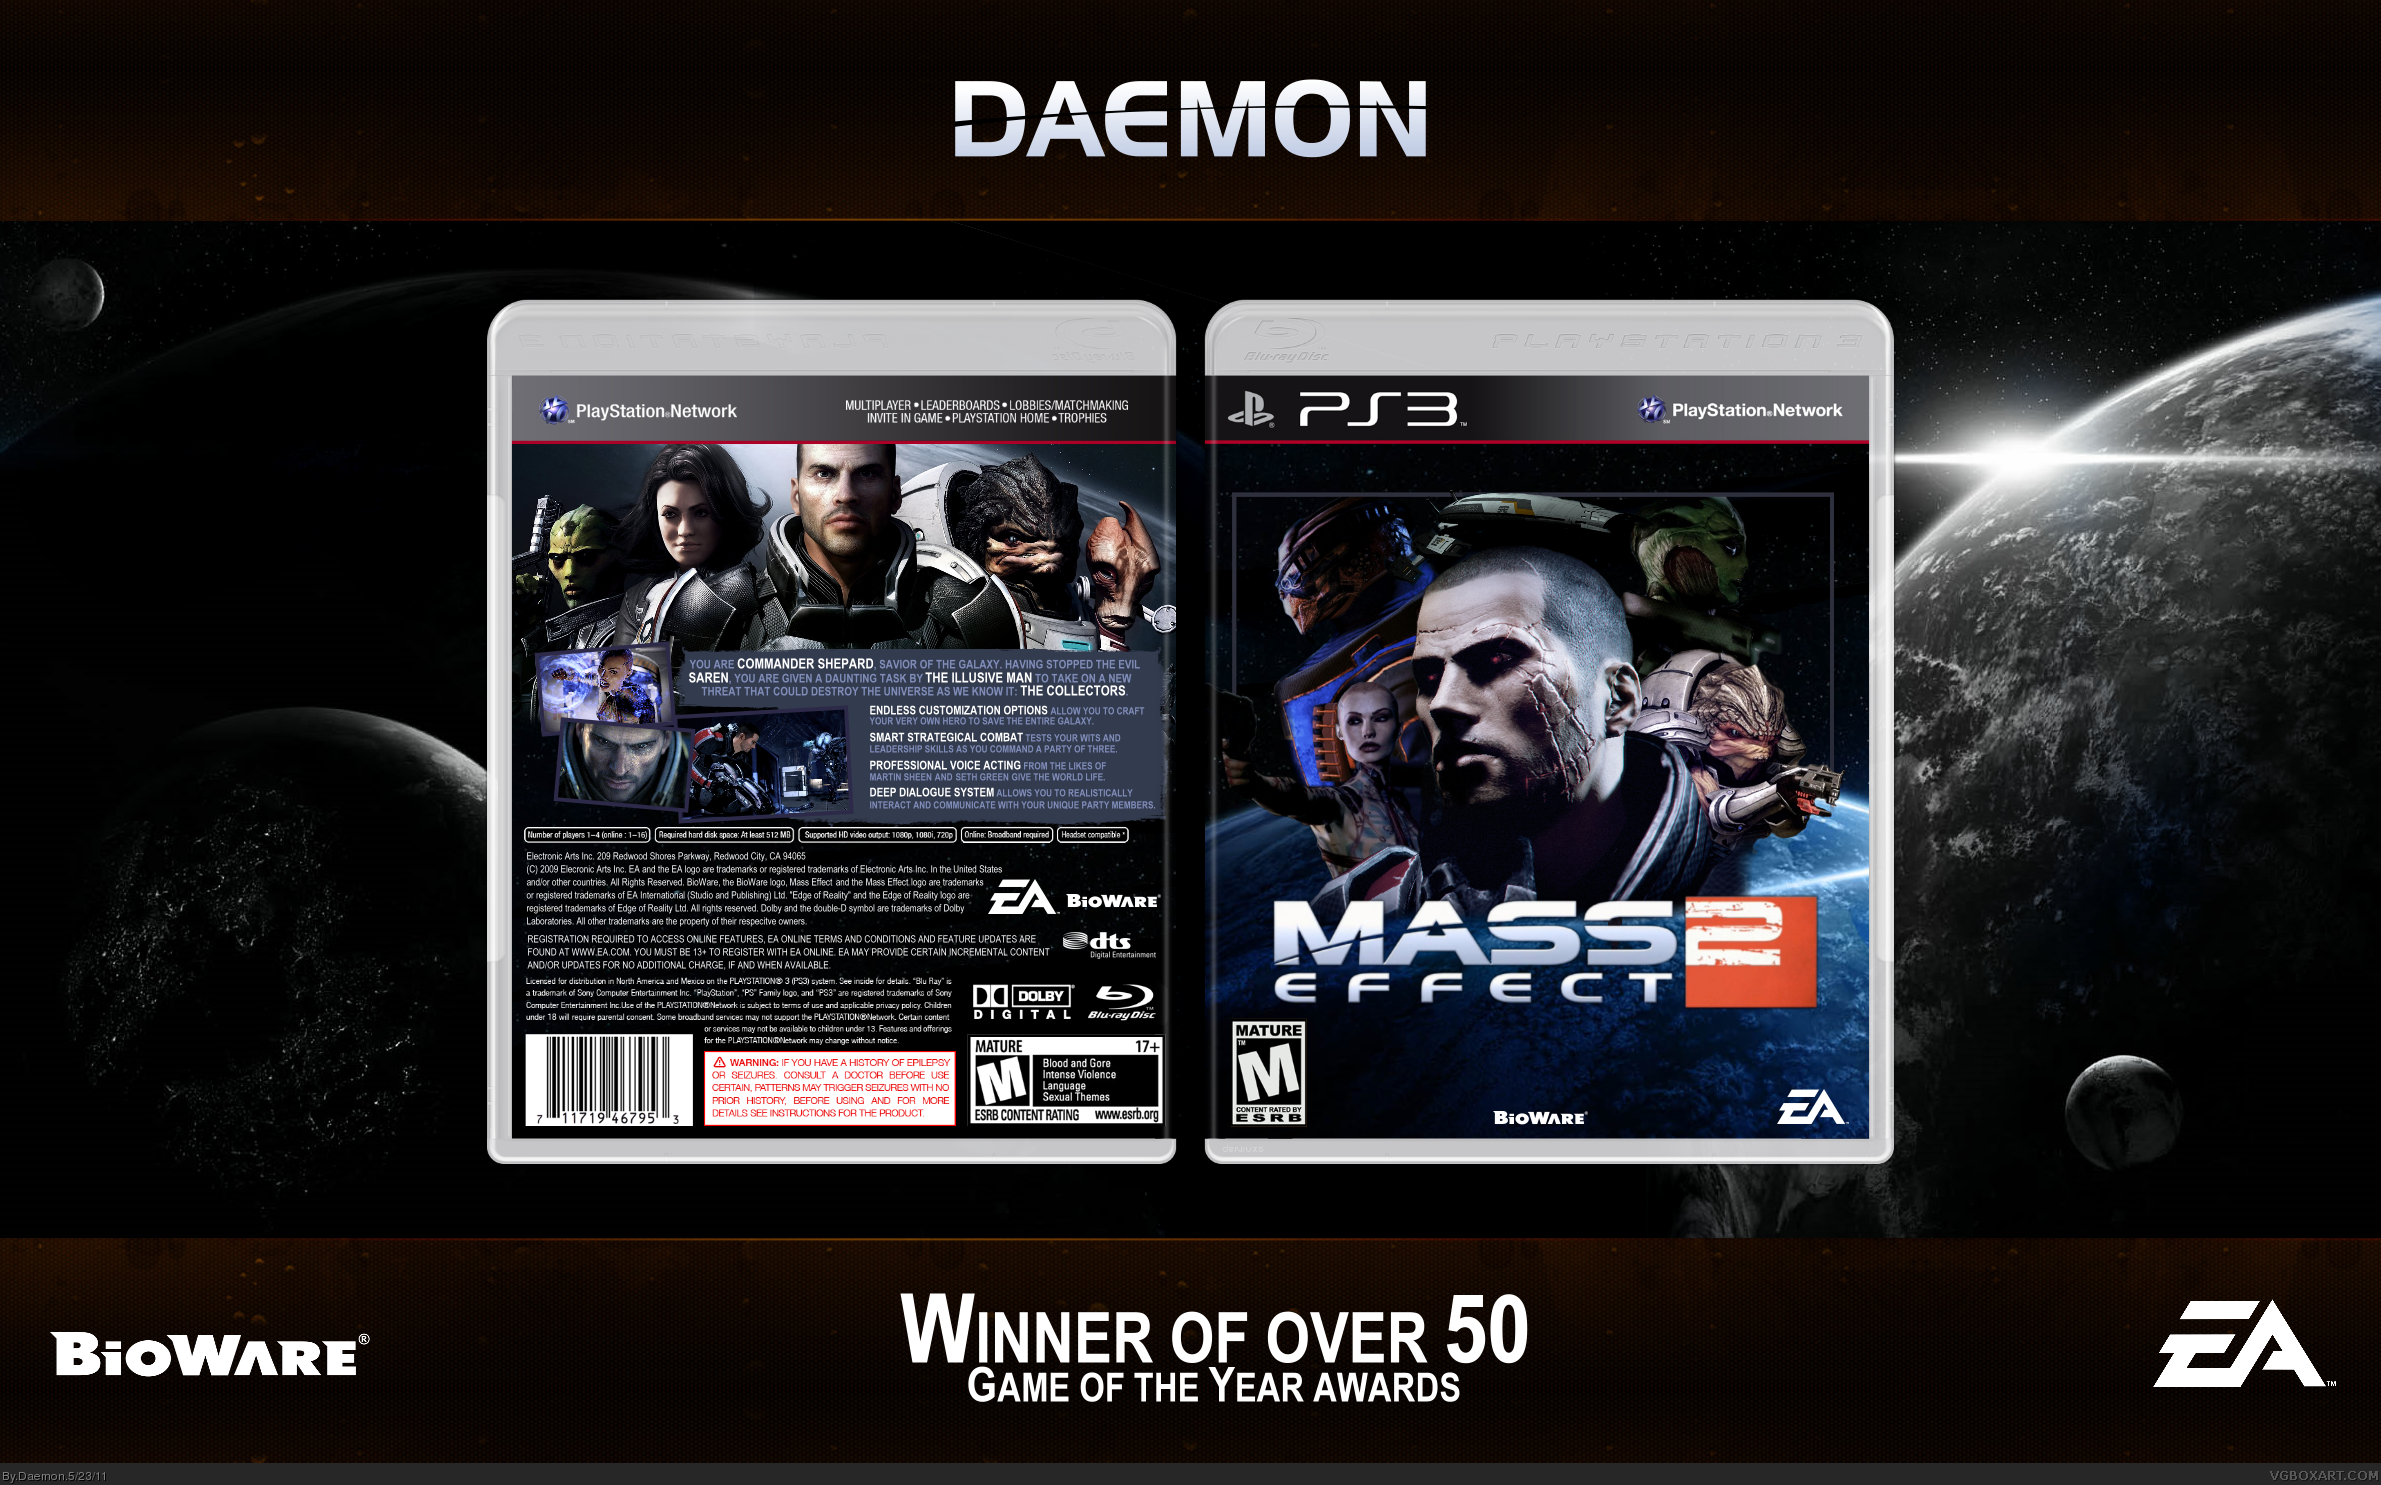 Mass Effect 2 box cover